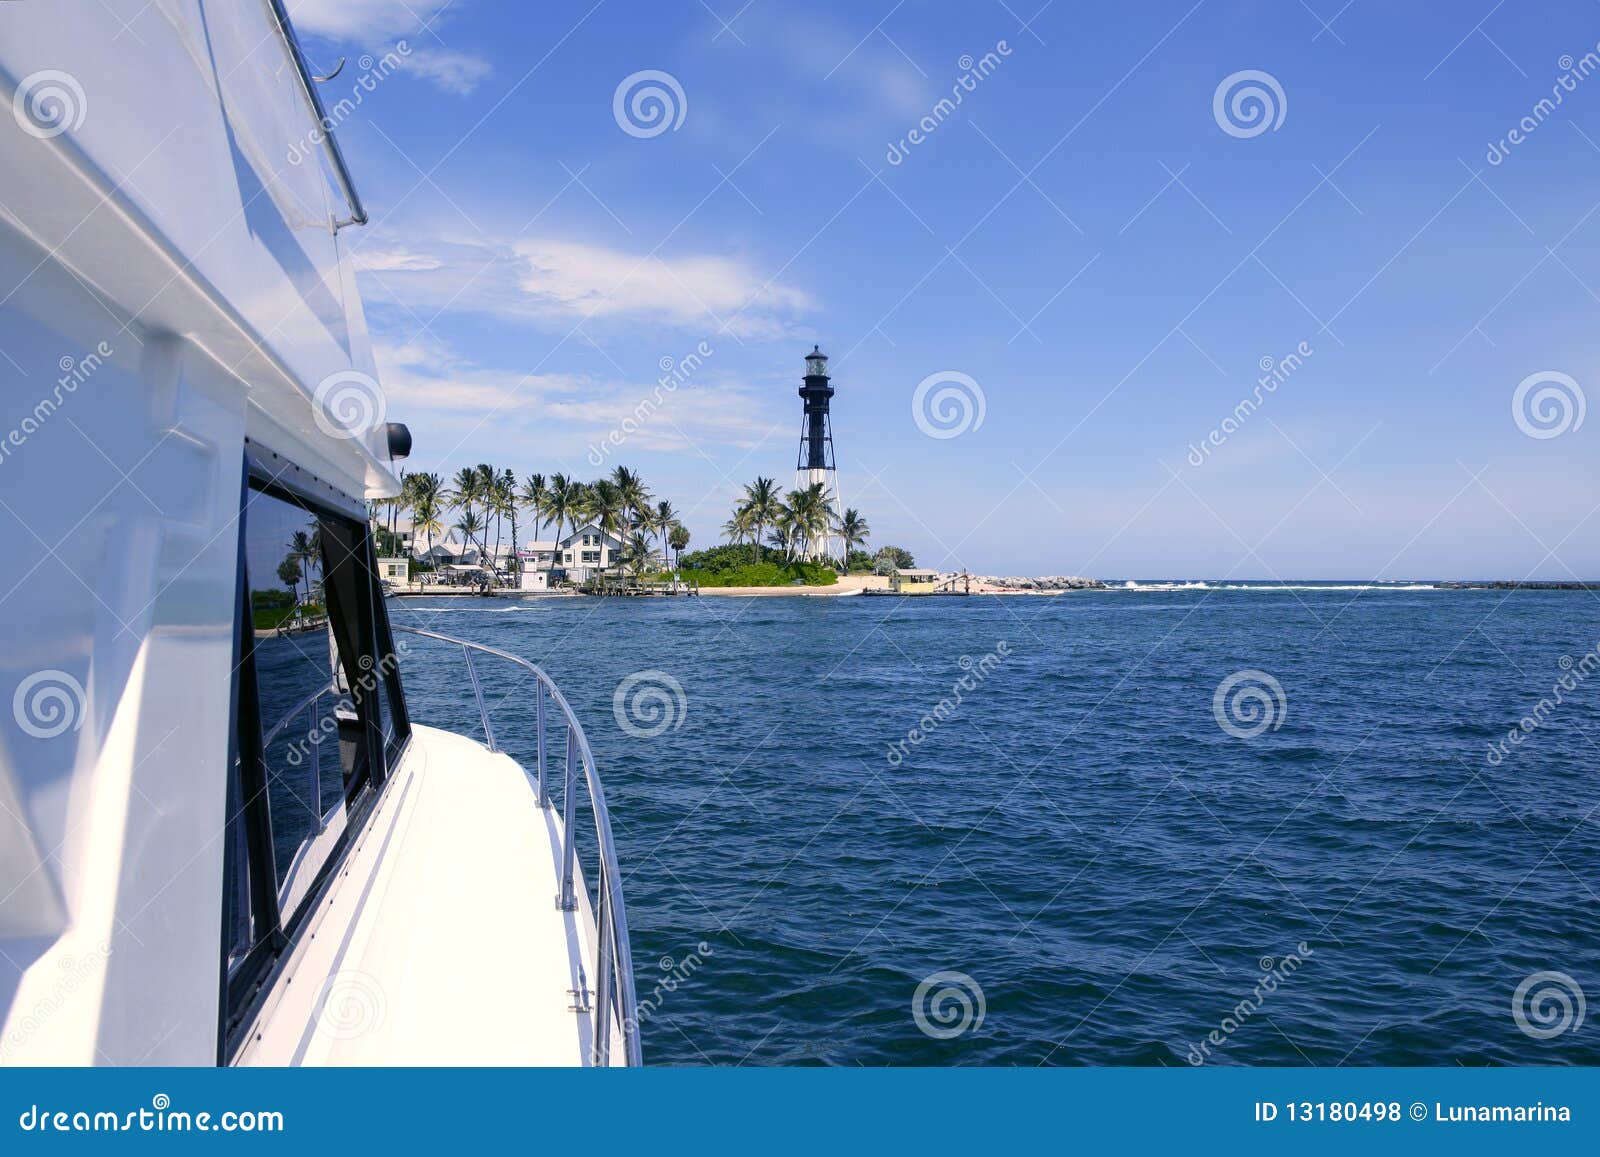 florida lighthouse pompano beach boats